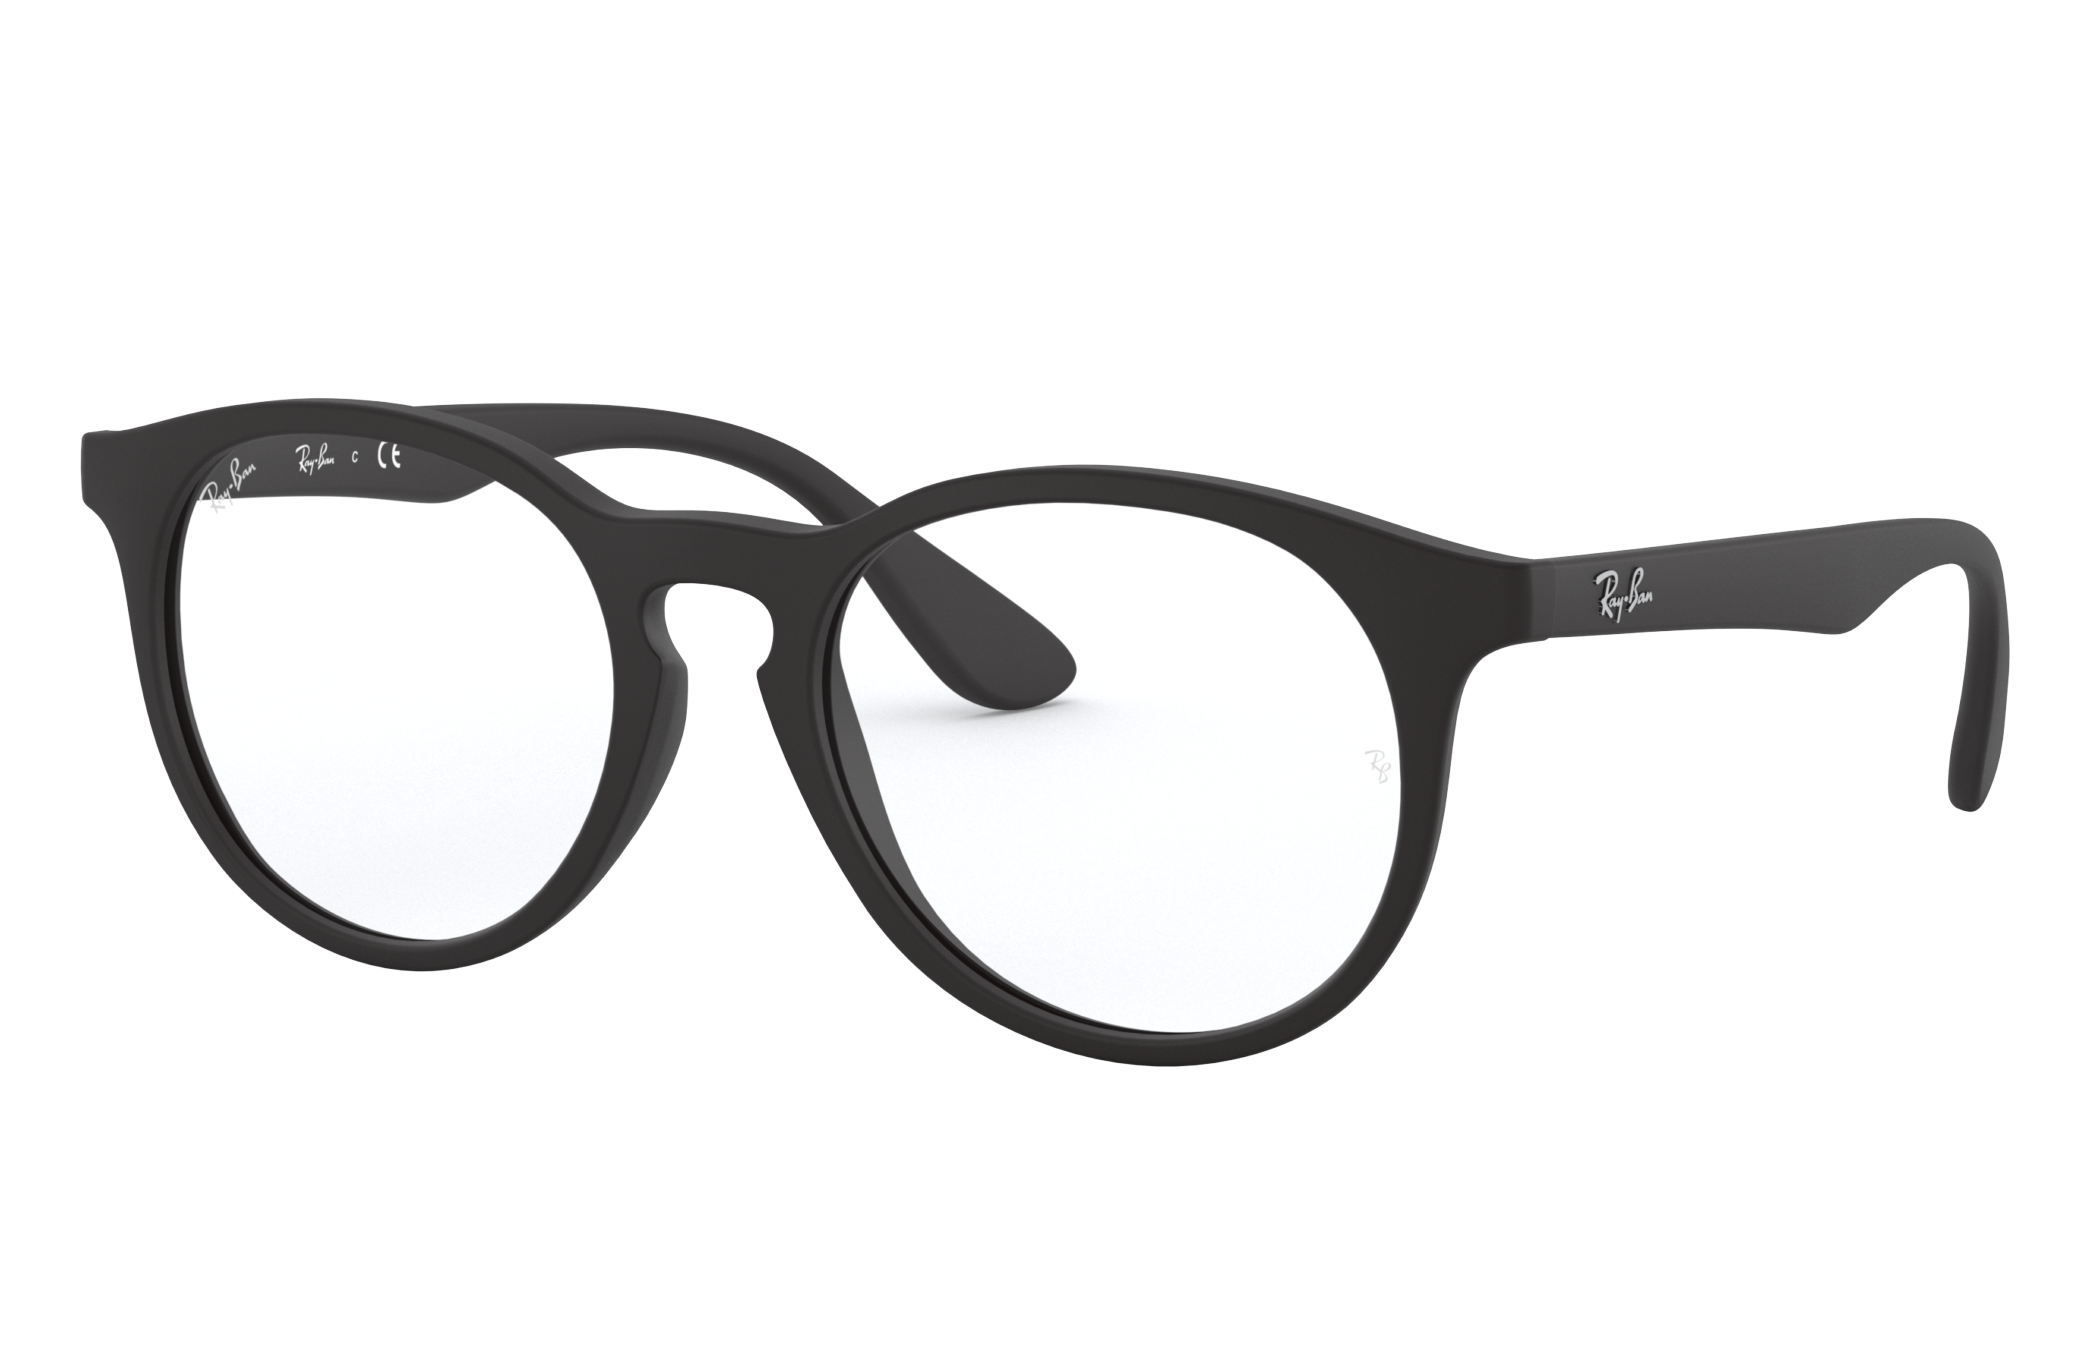 Rb1554 Optics Kids Eyeglasses with Black Frame | Ray-Ban®